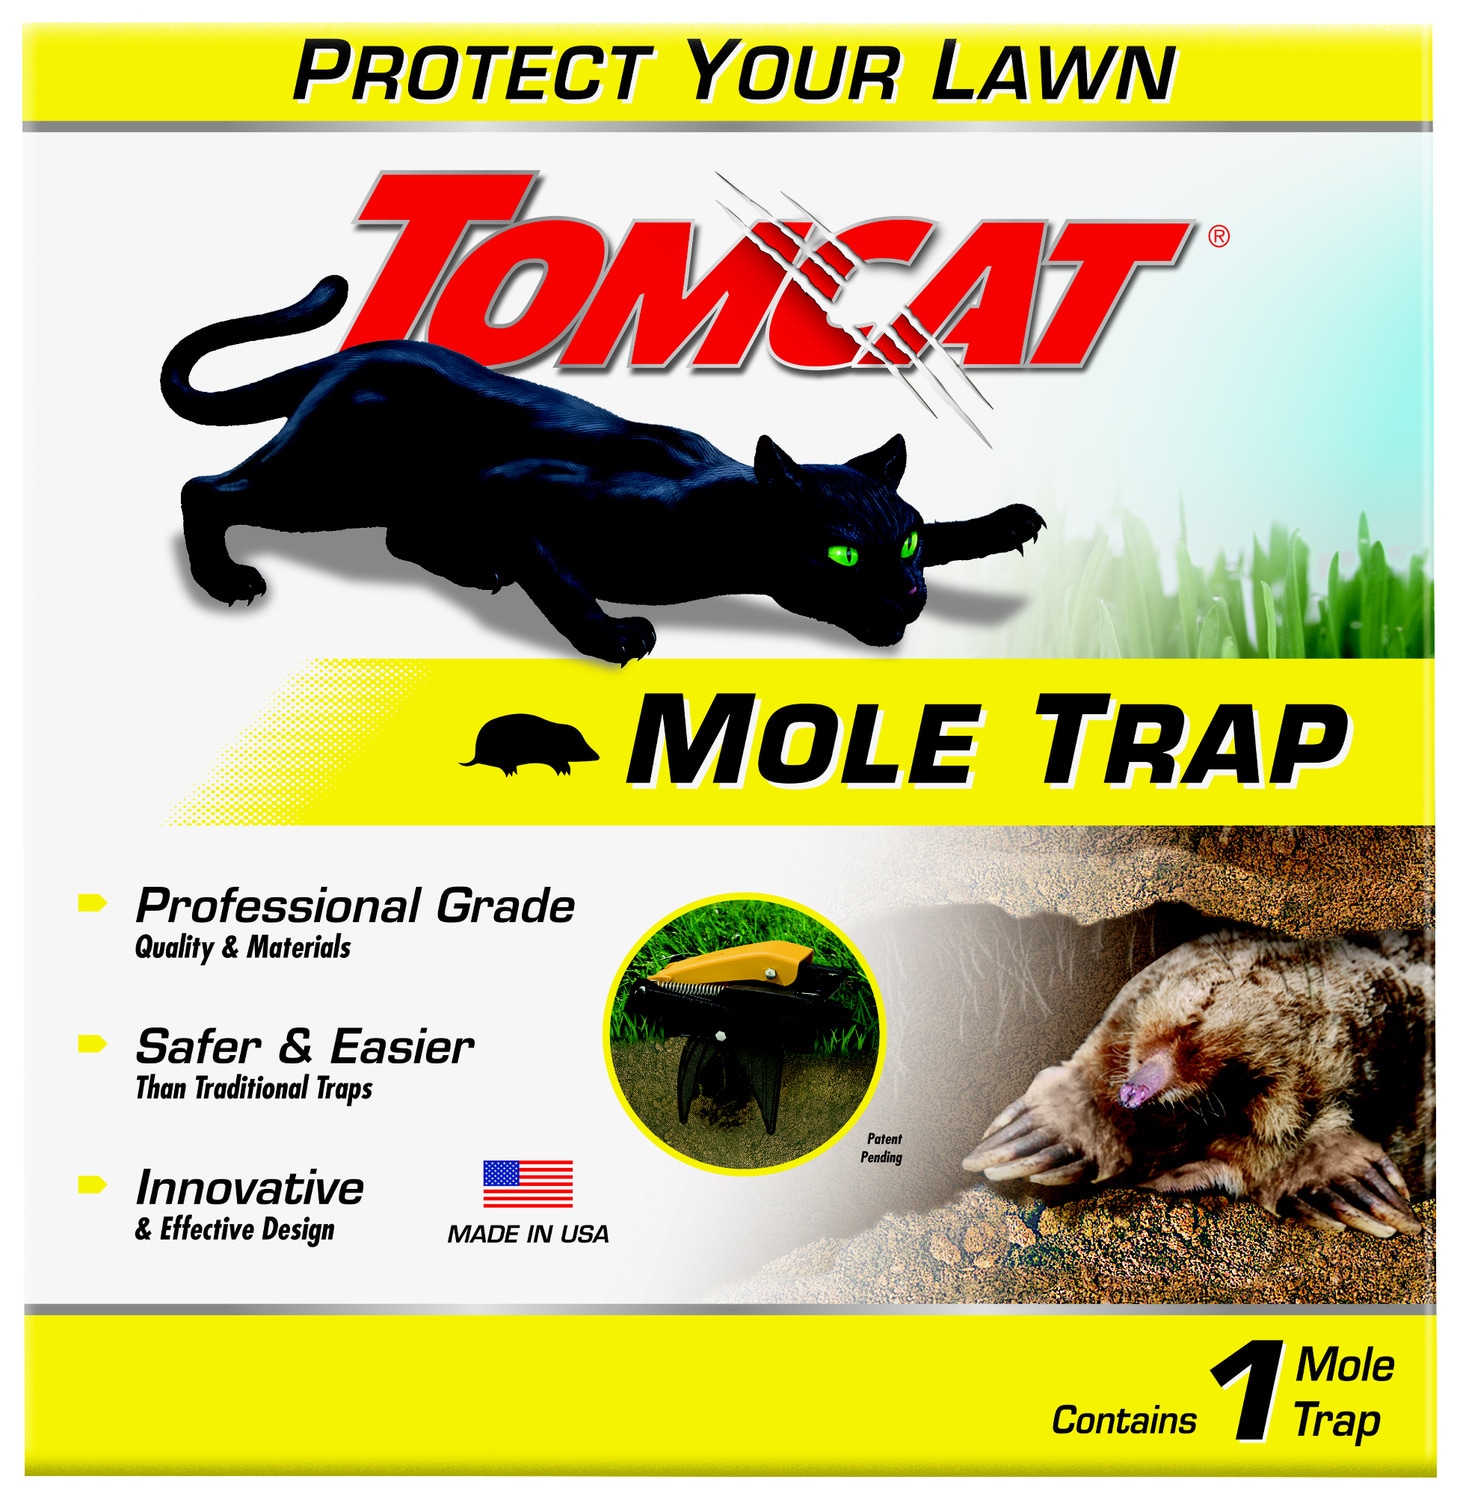 Tomcat Heavy Duty Mouse Trap